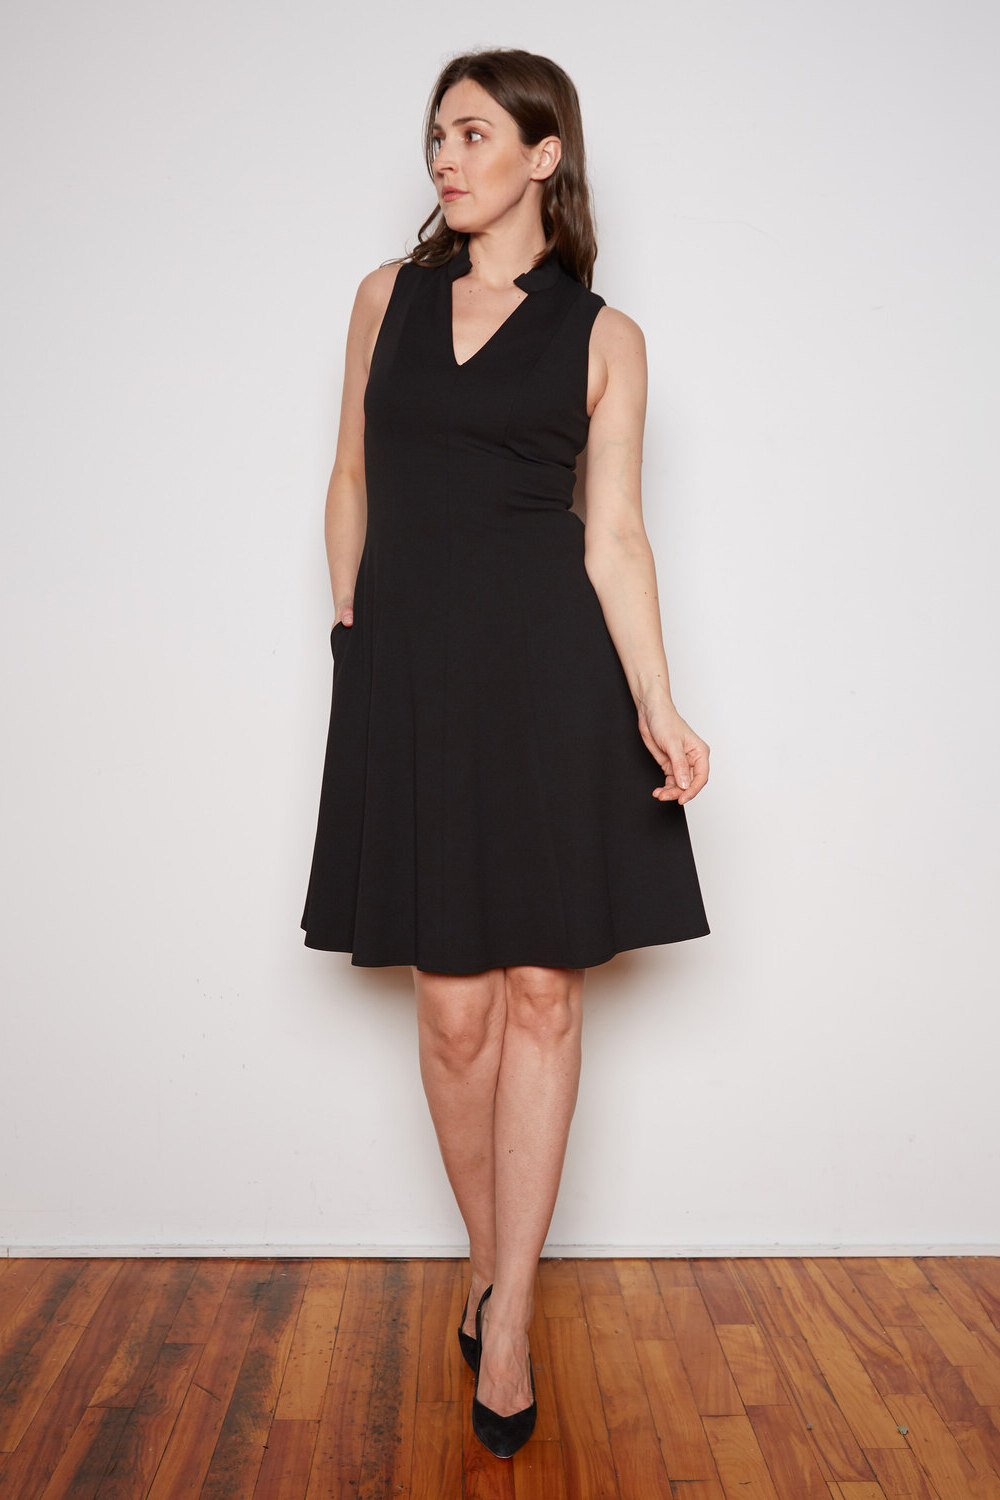 Joseph Ribkoff Dress Style 202334. Black